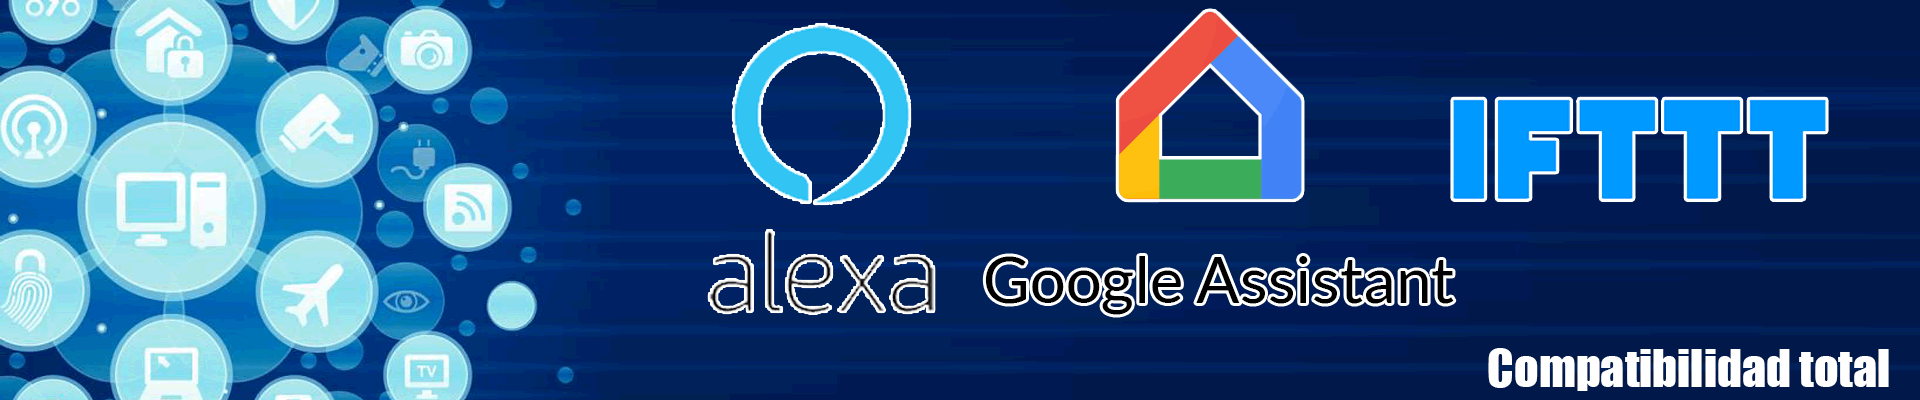 Alexa Google Asistant